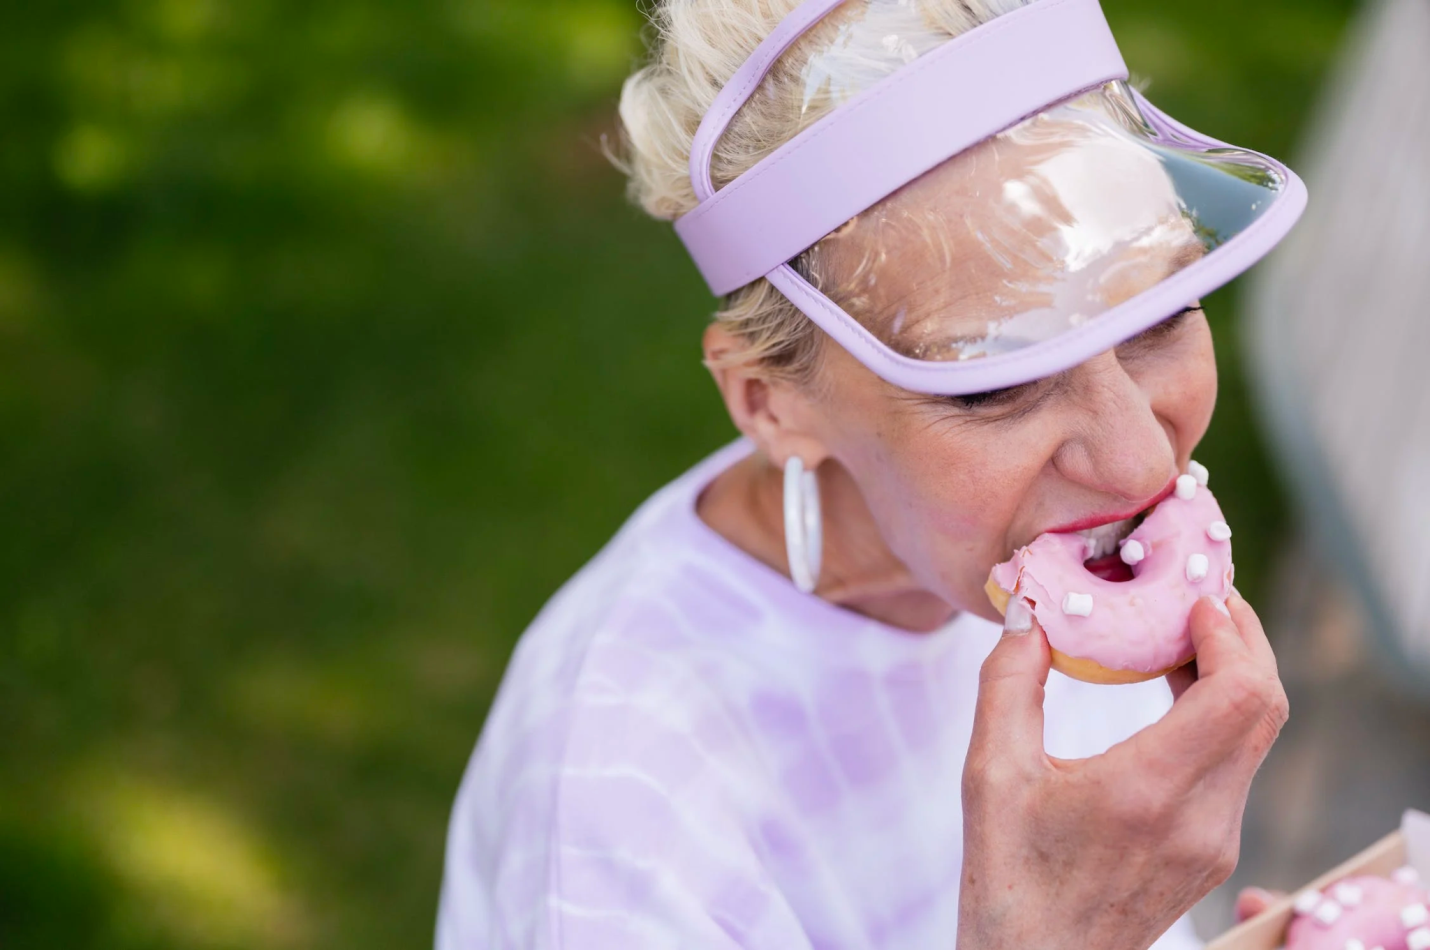 A senior enjoys a sweet treat, biting into a donut.